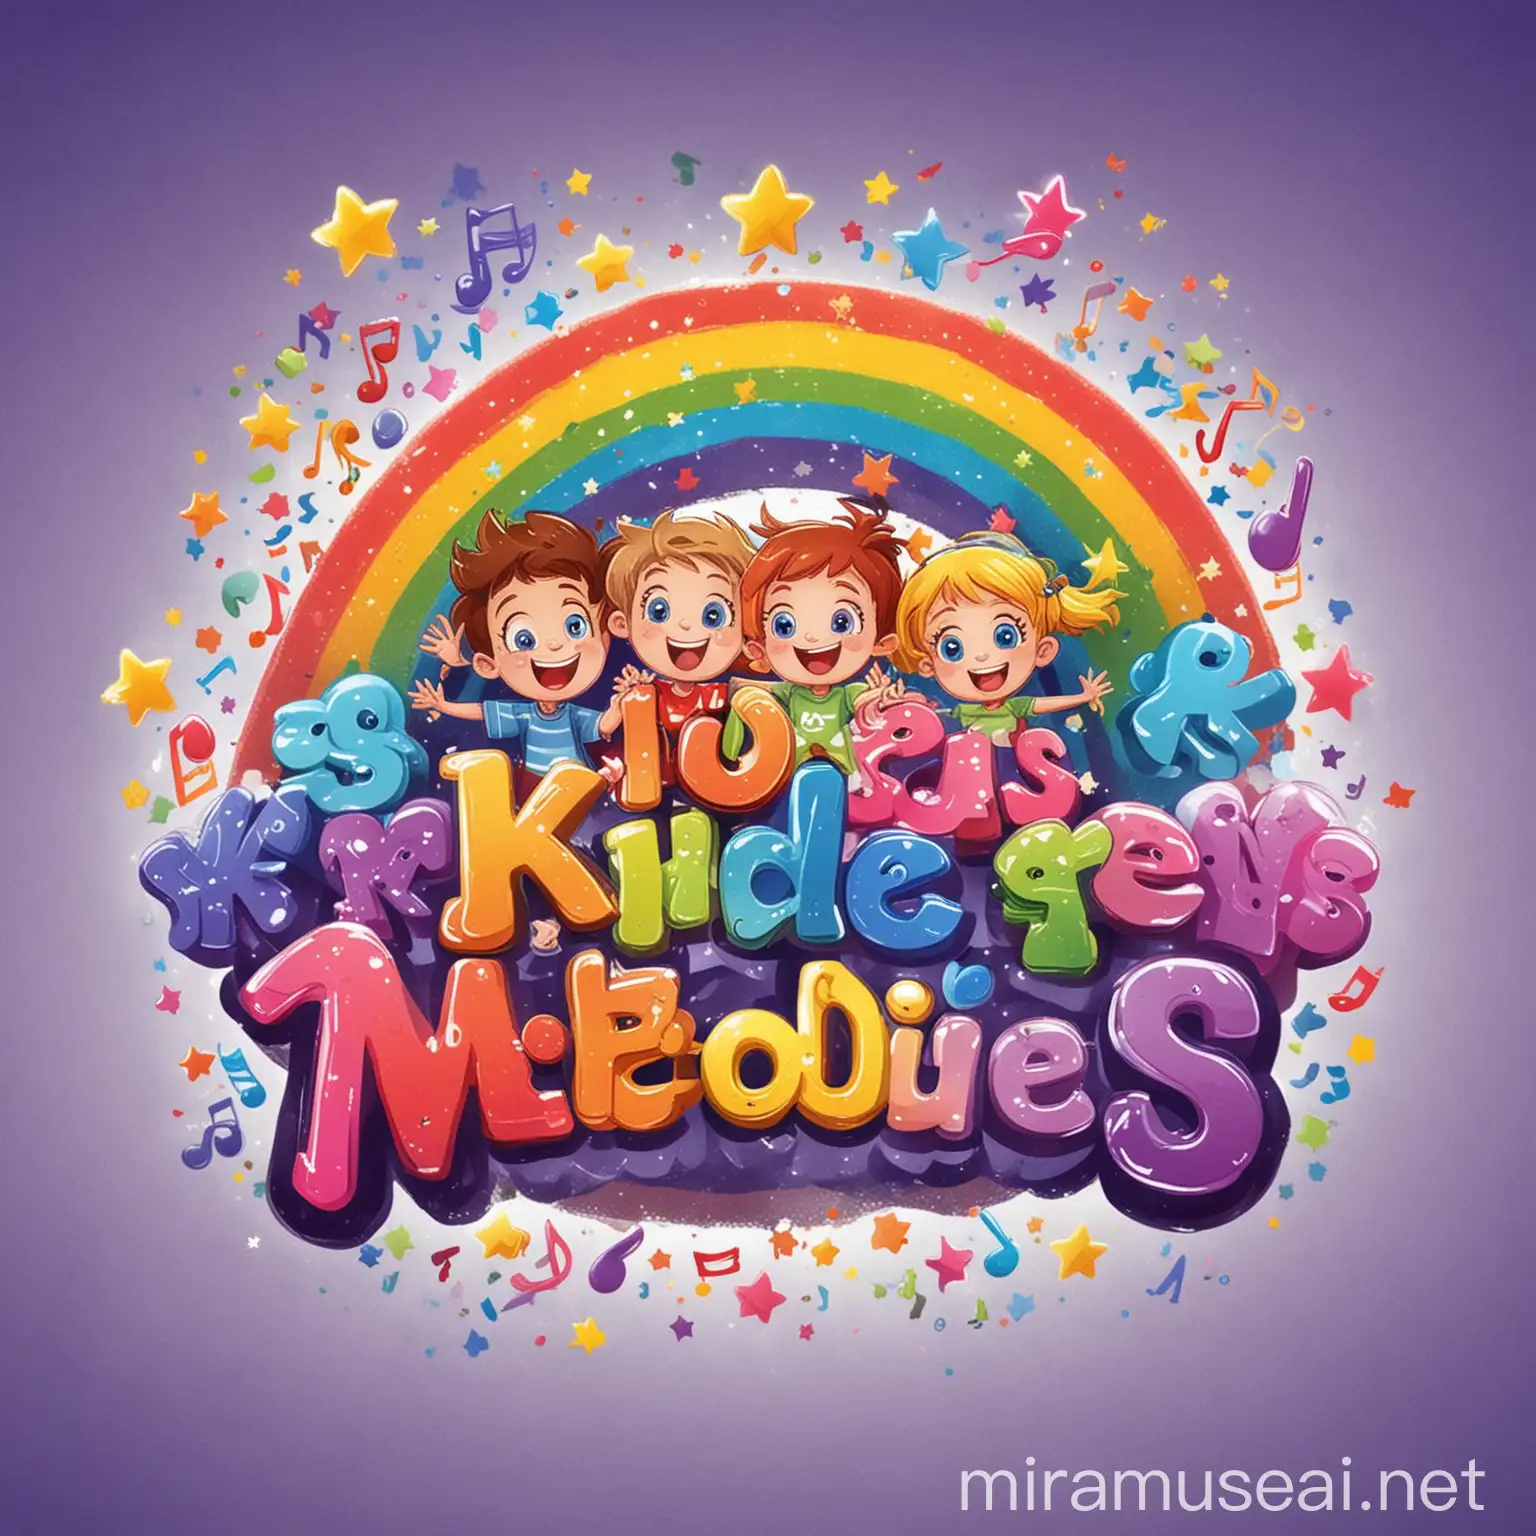 Vibrant Kidz Melodies Logo Playful Kids Singing and Dancing Among Colorful Musical Notes